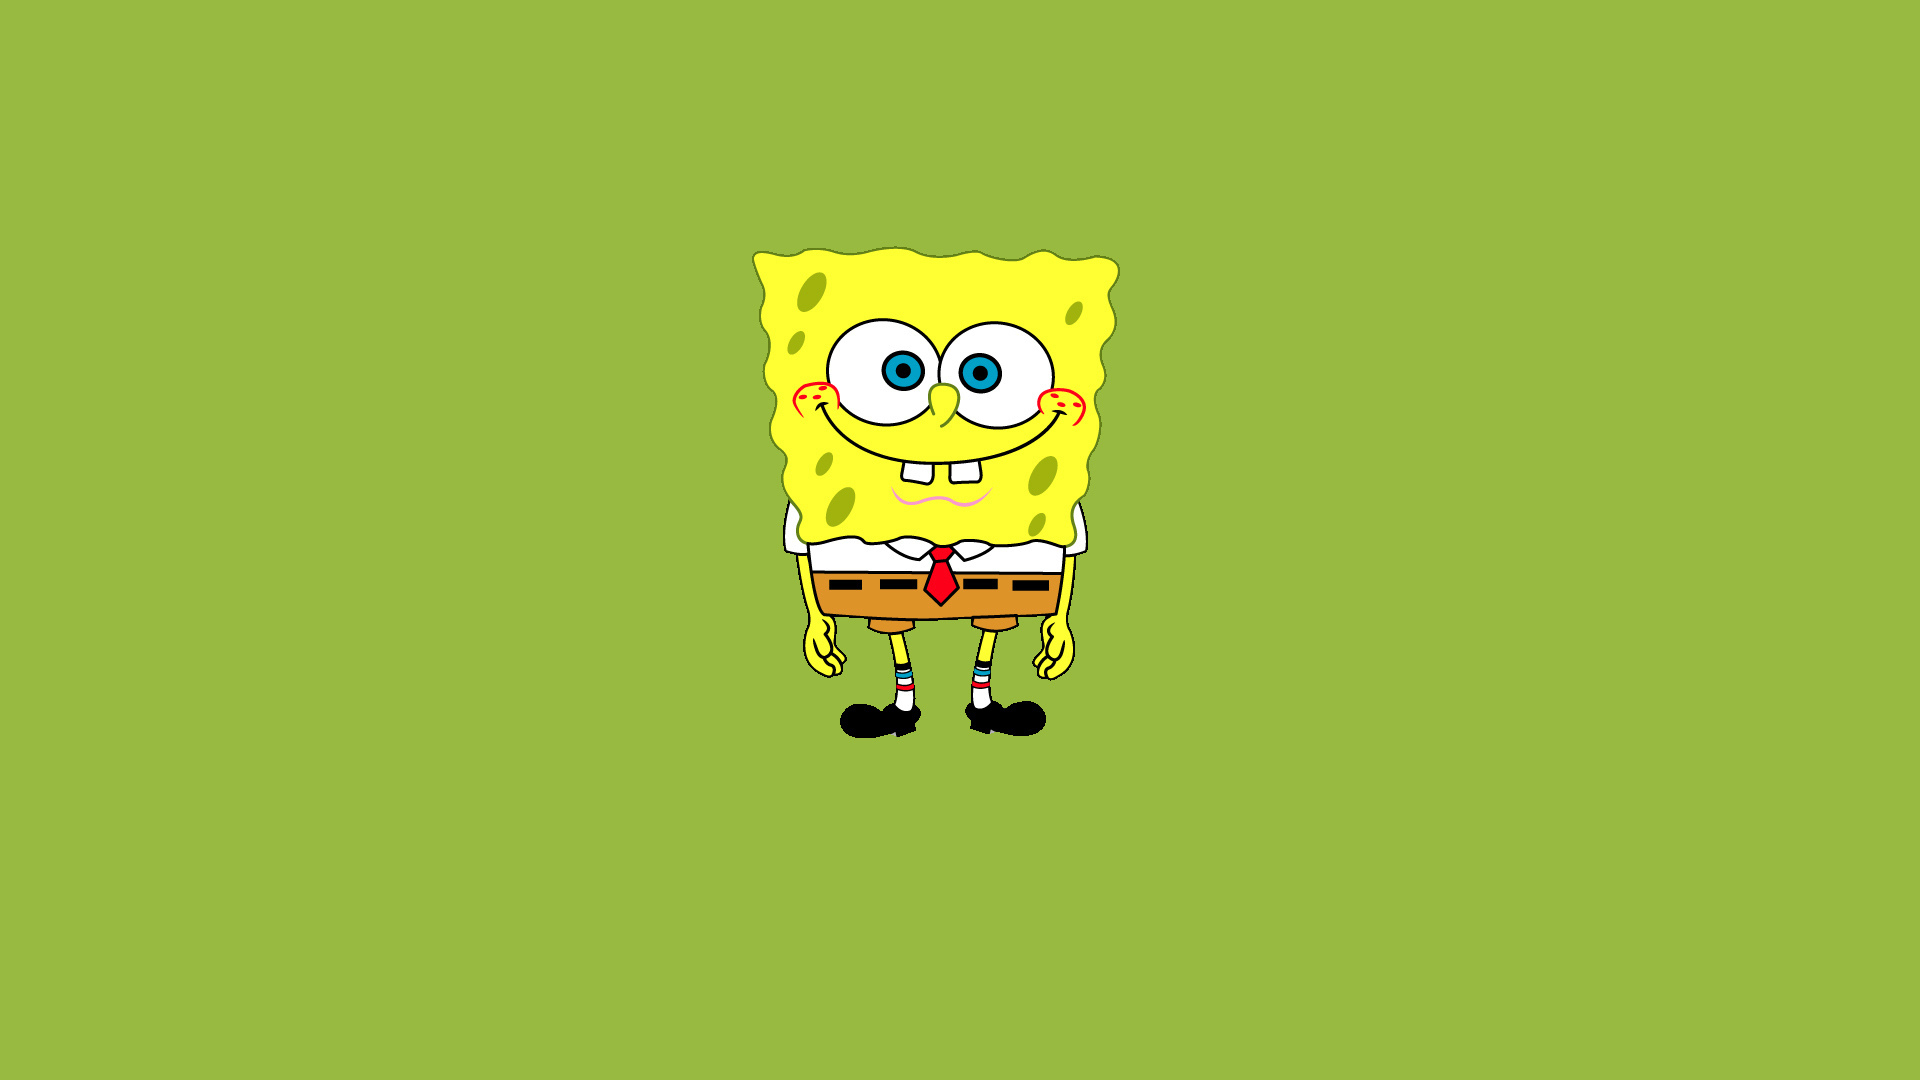  Spongebob  Squarepants Wallpapers  Pictures Images